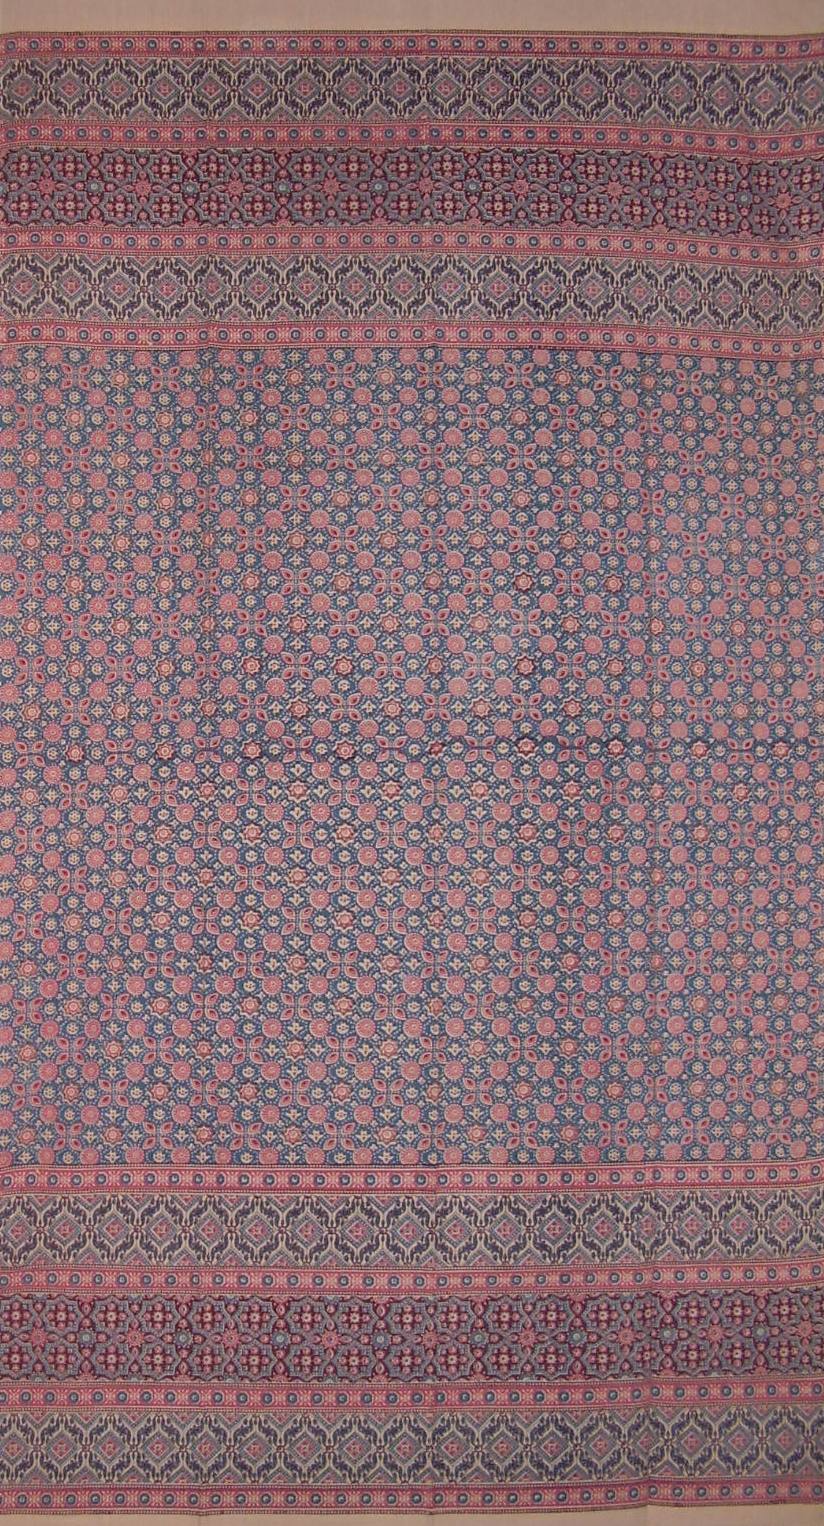 Moroccan Foulard Print Curtain Drape Panel Cotton 46" x 82" Salmon Pink